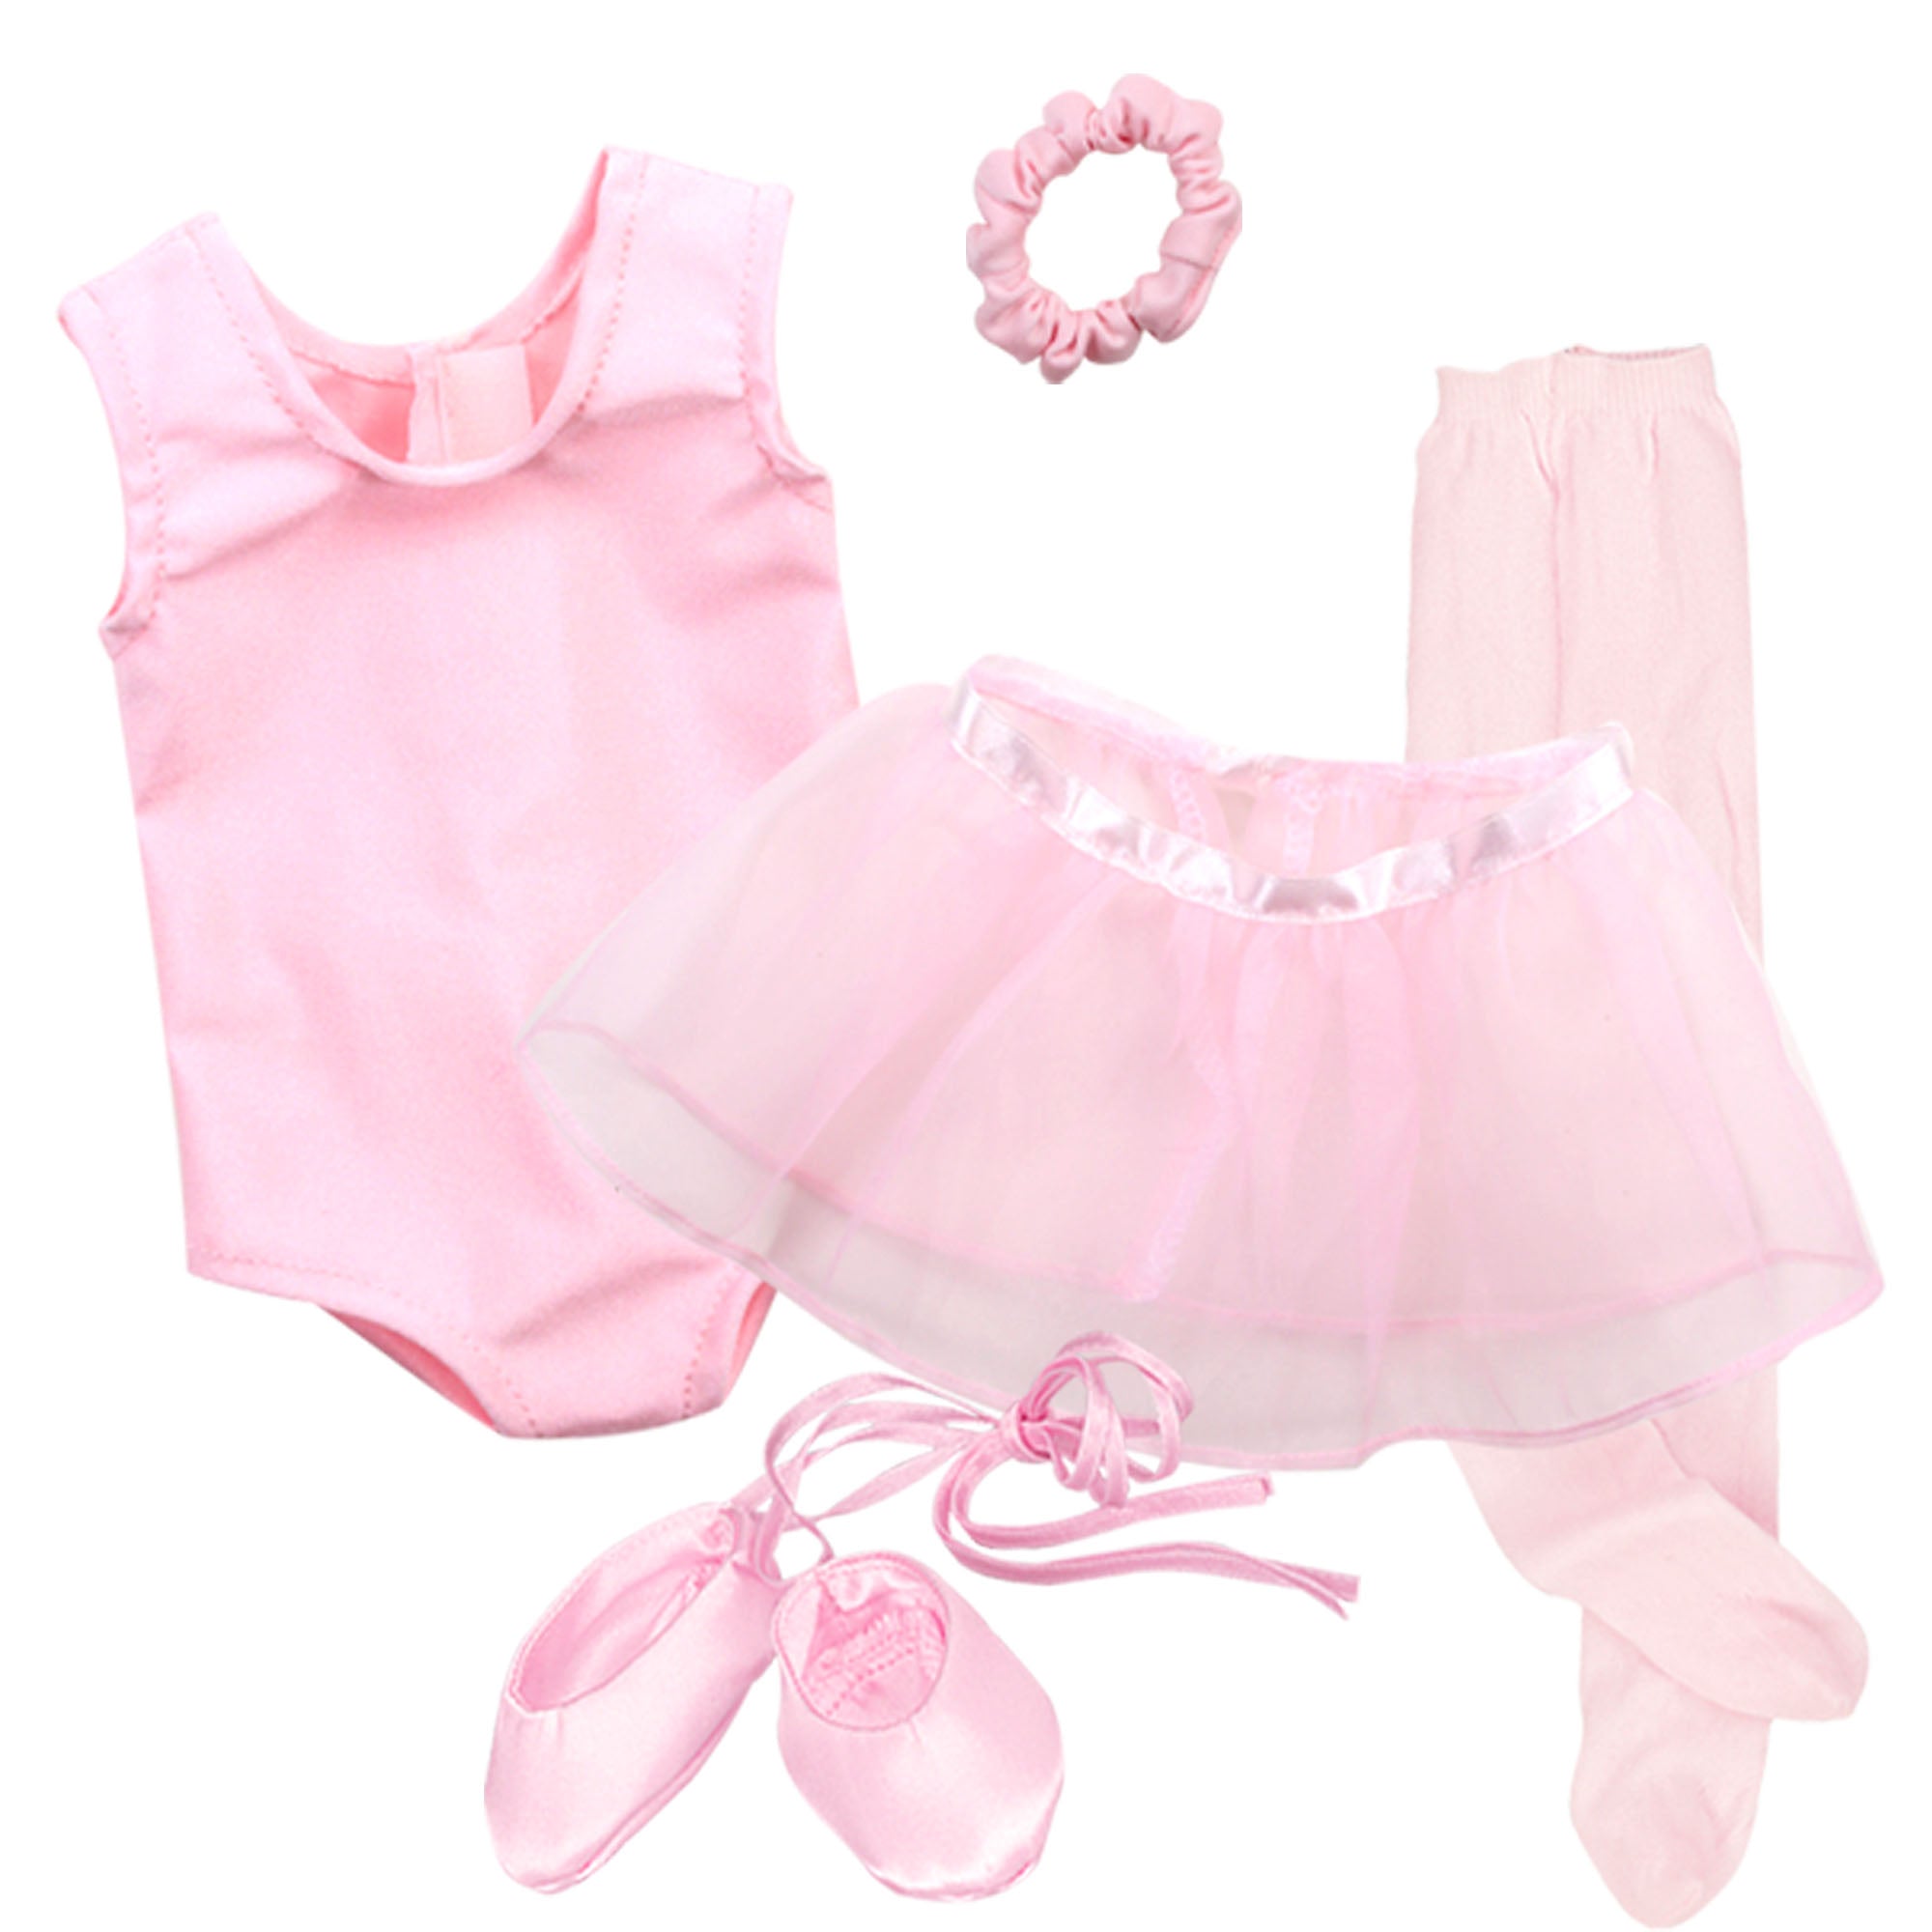 Sophia's 5 Piece Ballet Outfit Set for 18'' Dolls, Light Pink